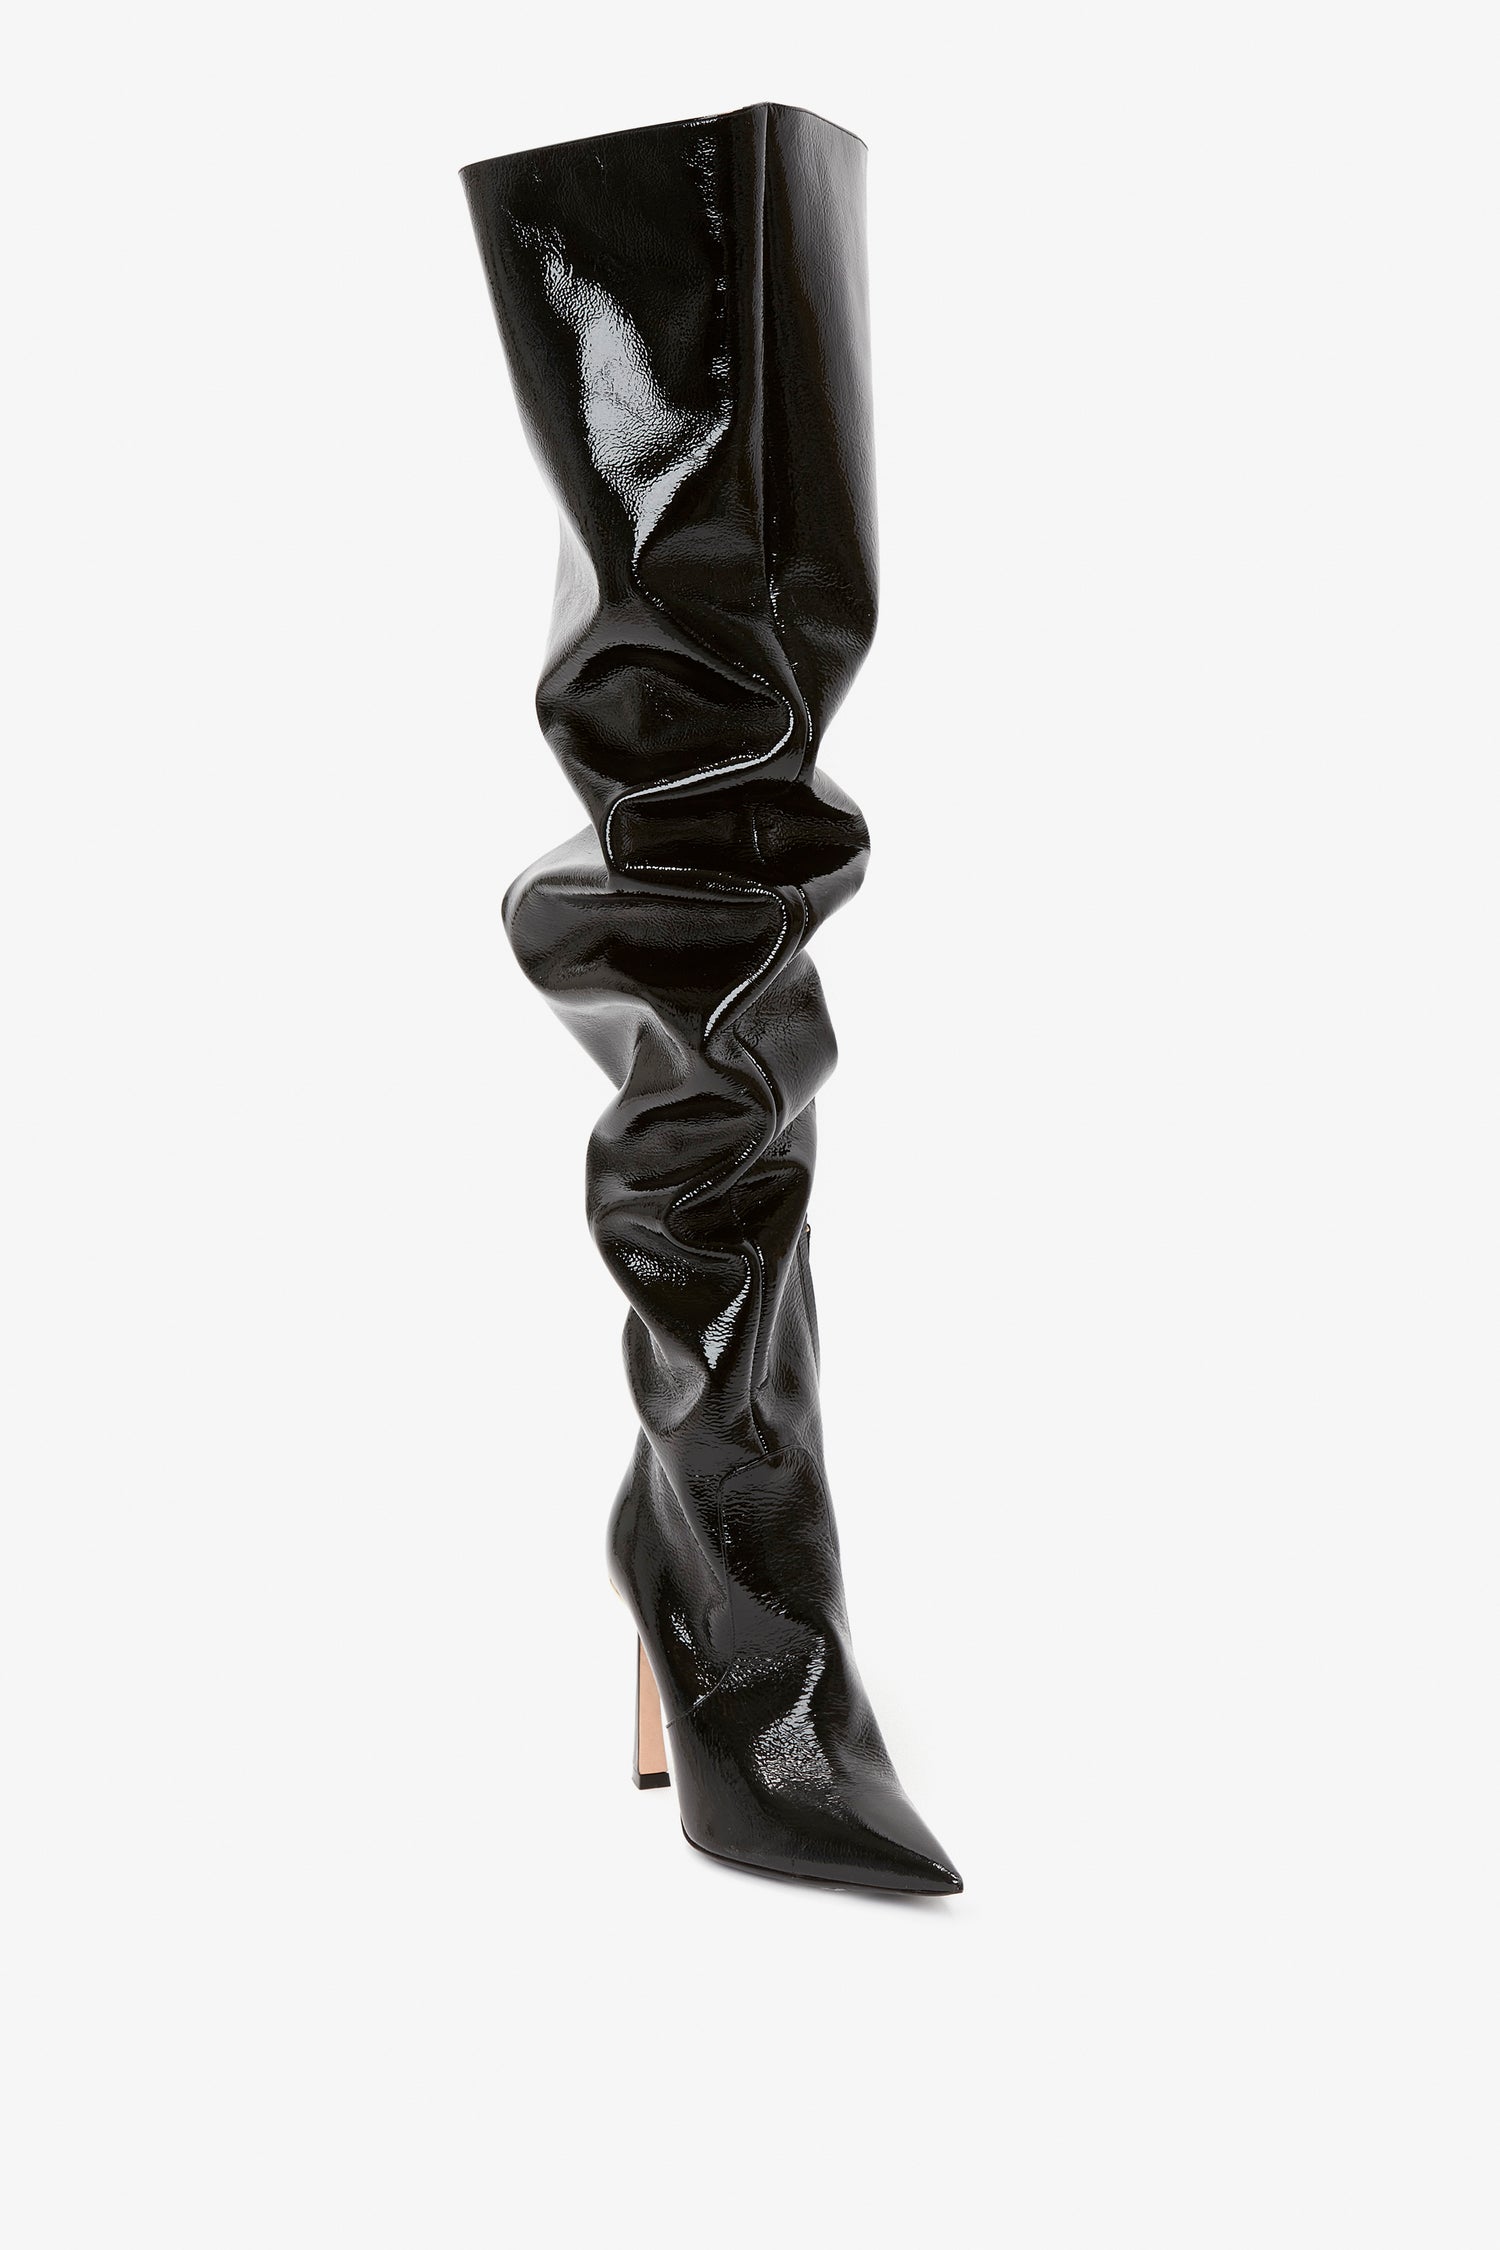 Black Patent Glossy Platforms Stiletto Super High Heels Ankle ...